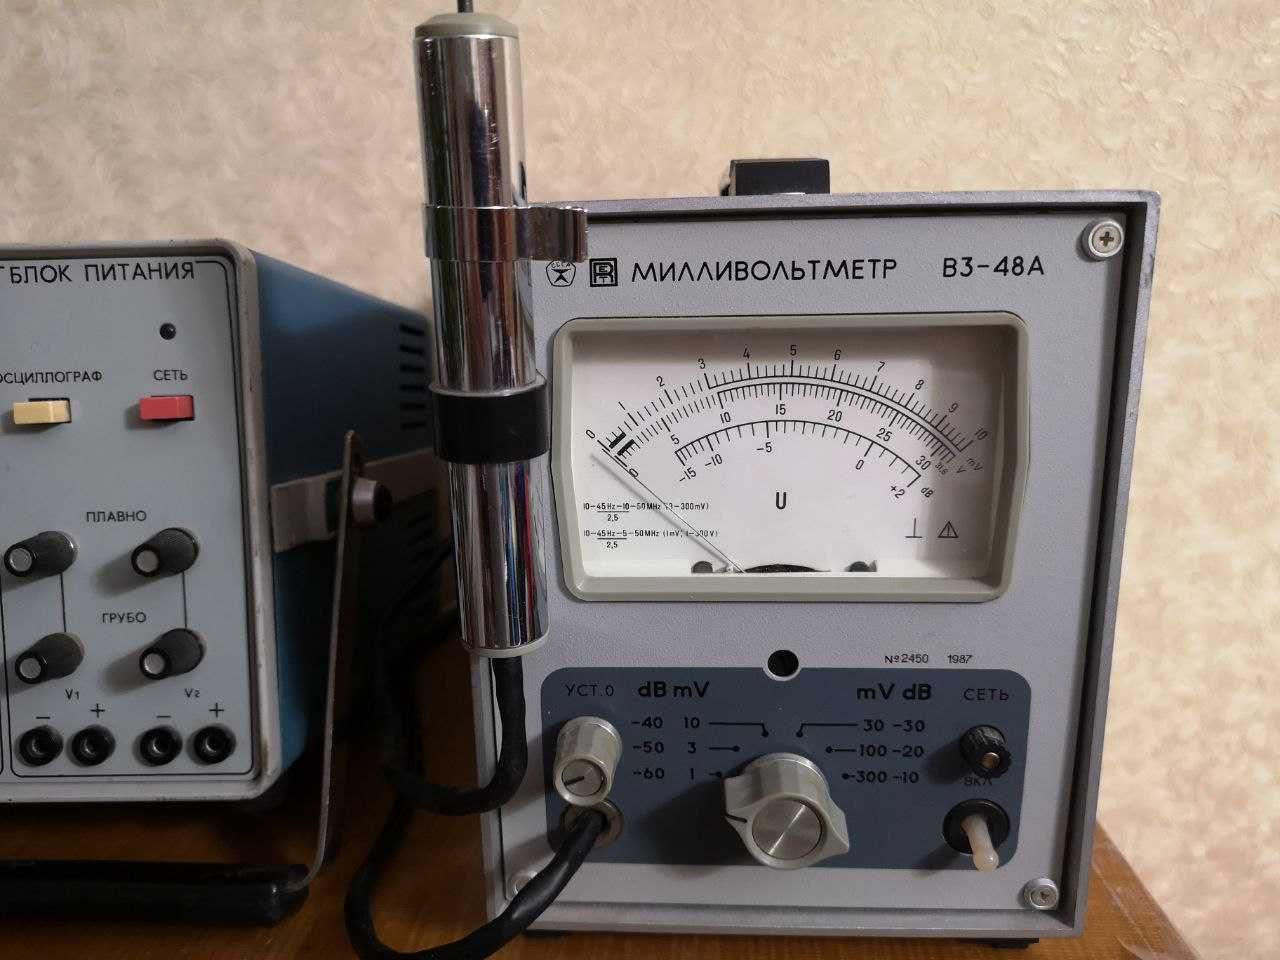 Прибор милливольтметр В3-48А, 1987г